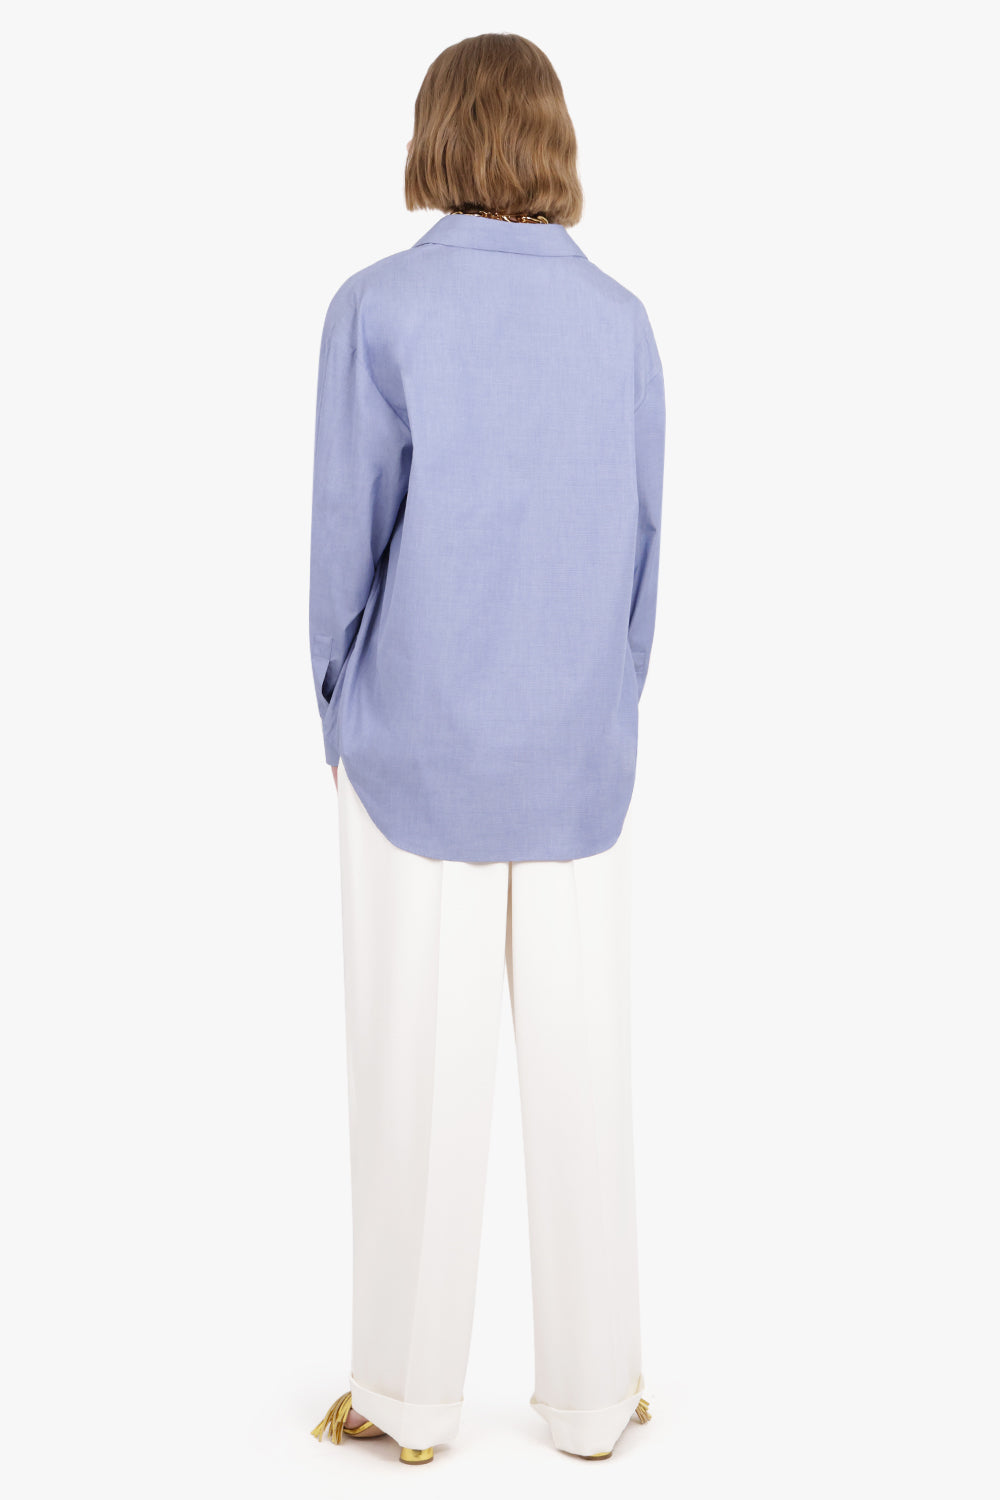 THE ROW RTW Attica Cotton Shirt | Oxford Blue